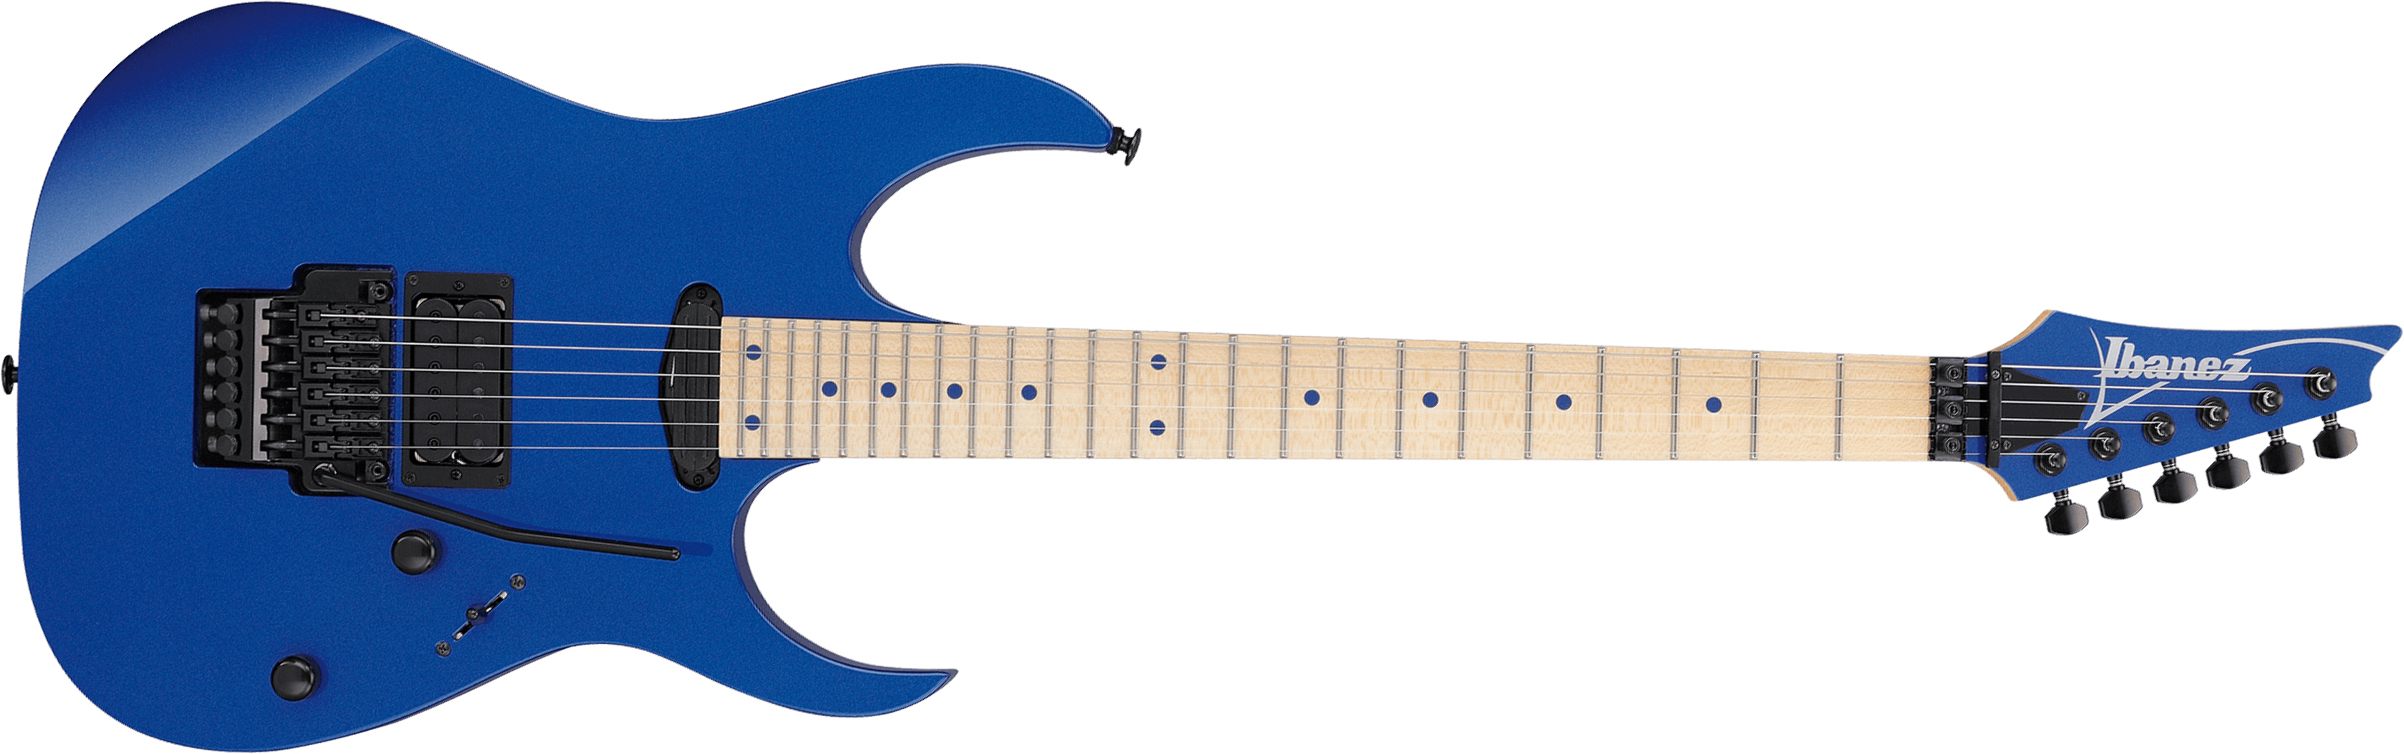 Ibanez Rg565 Lb Genesis Jap Hst Fr Mn - Laser Blue - Str shape electric guitar - Main picture